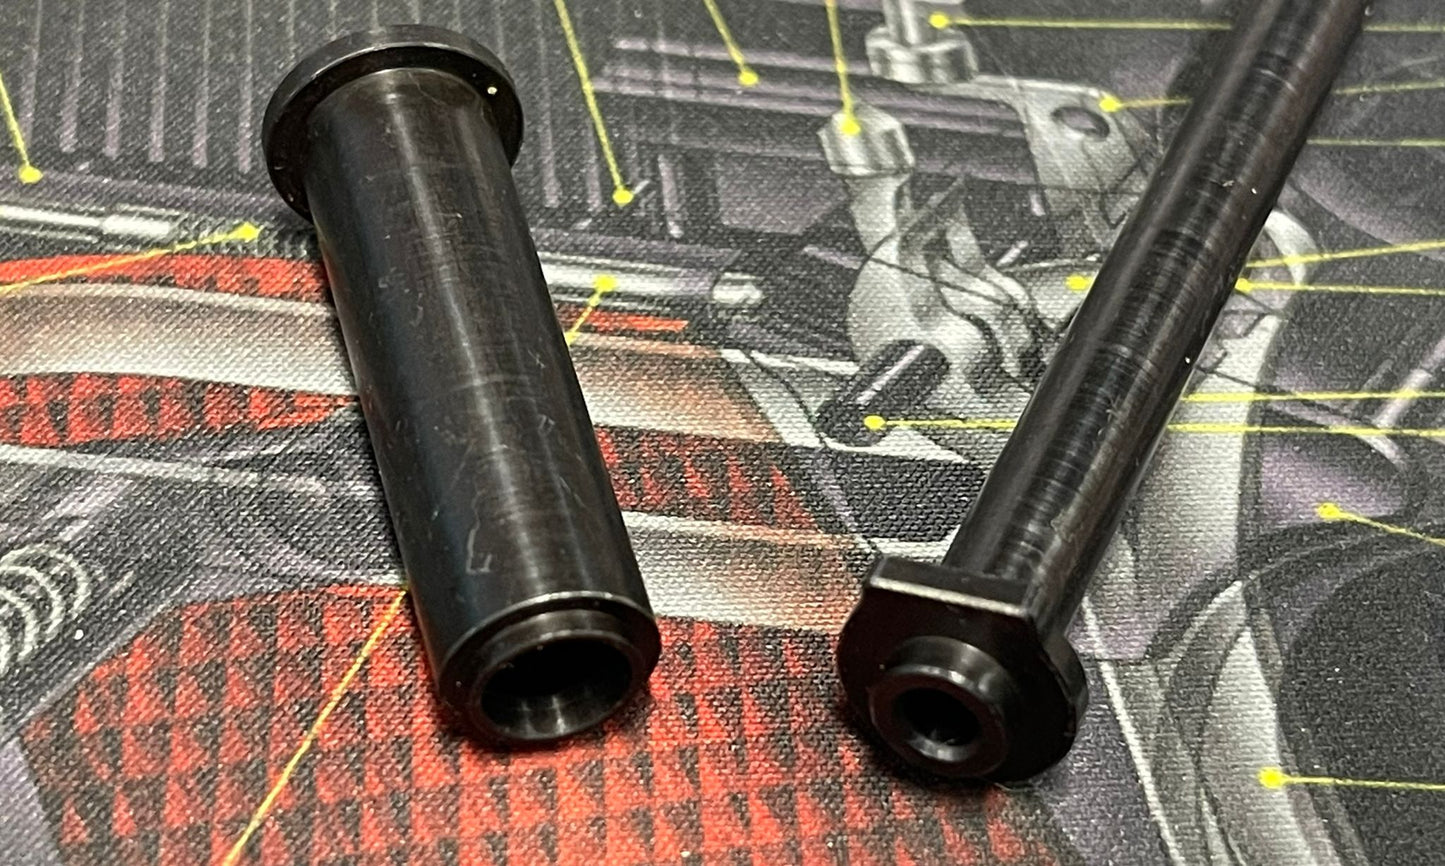 Nova Steel QD 5inch Recoil Spring Plug & Guide Rod Set - Black